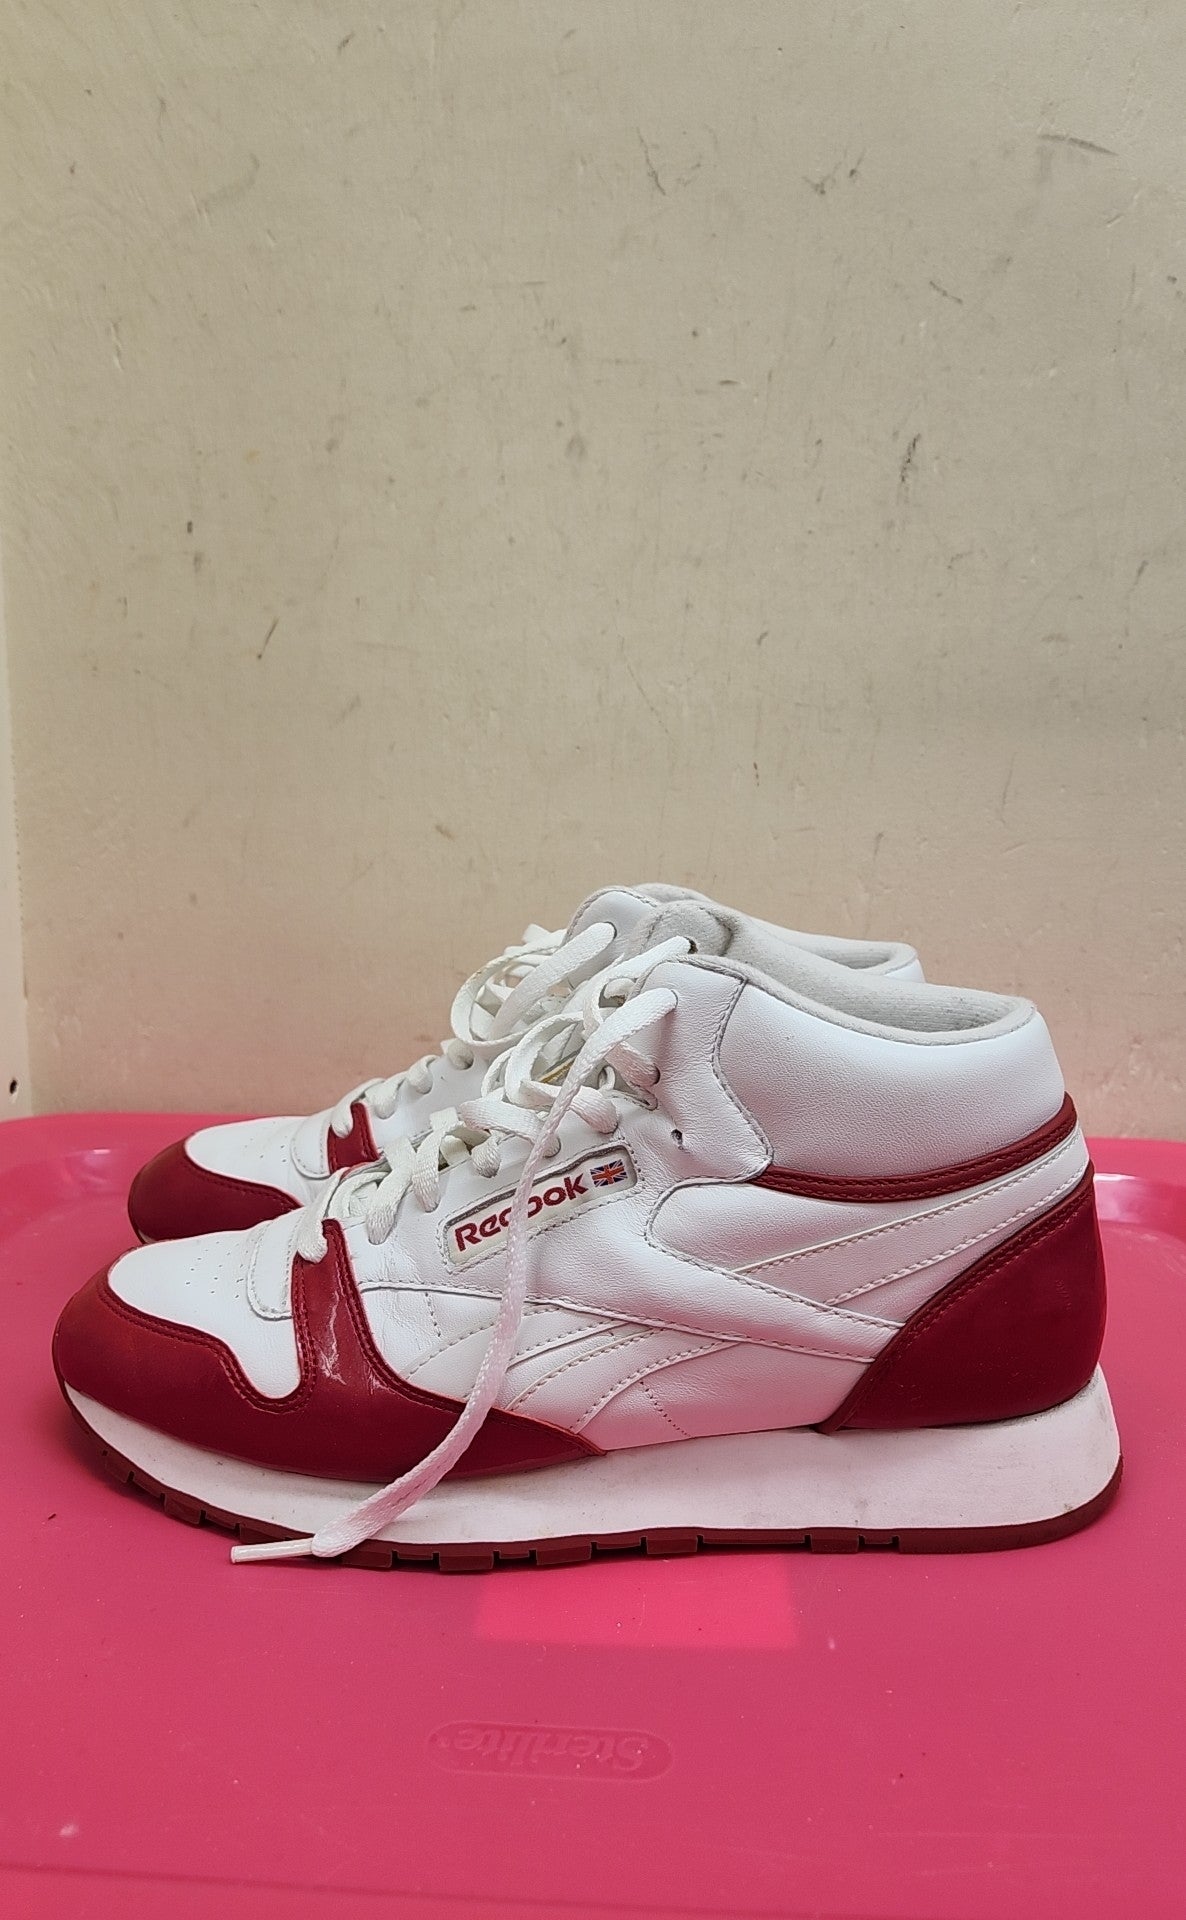 Reebok Men's Size 10 Red & White Sneakers